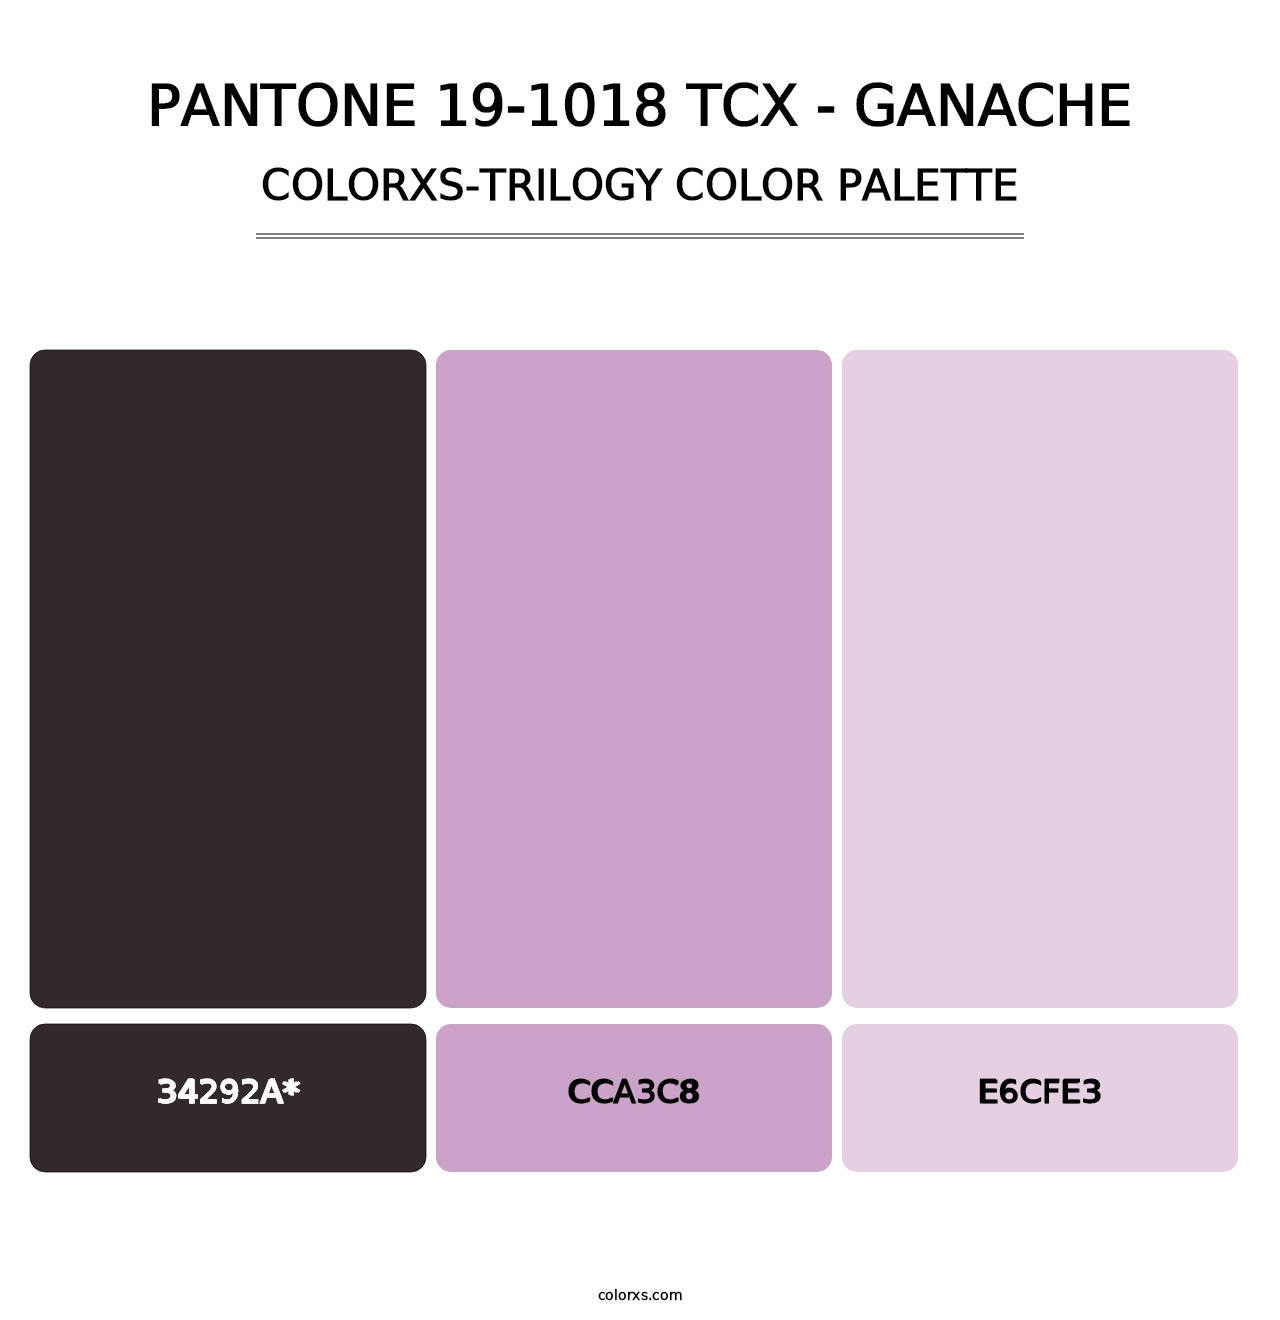 PANTONE 19-1018 TCX - Ganache - Colorxs Trilogy Palette